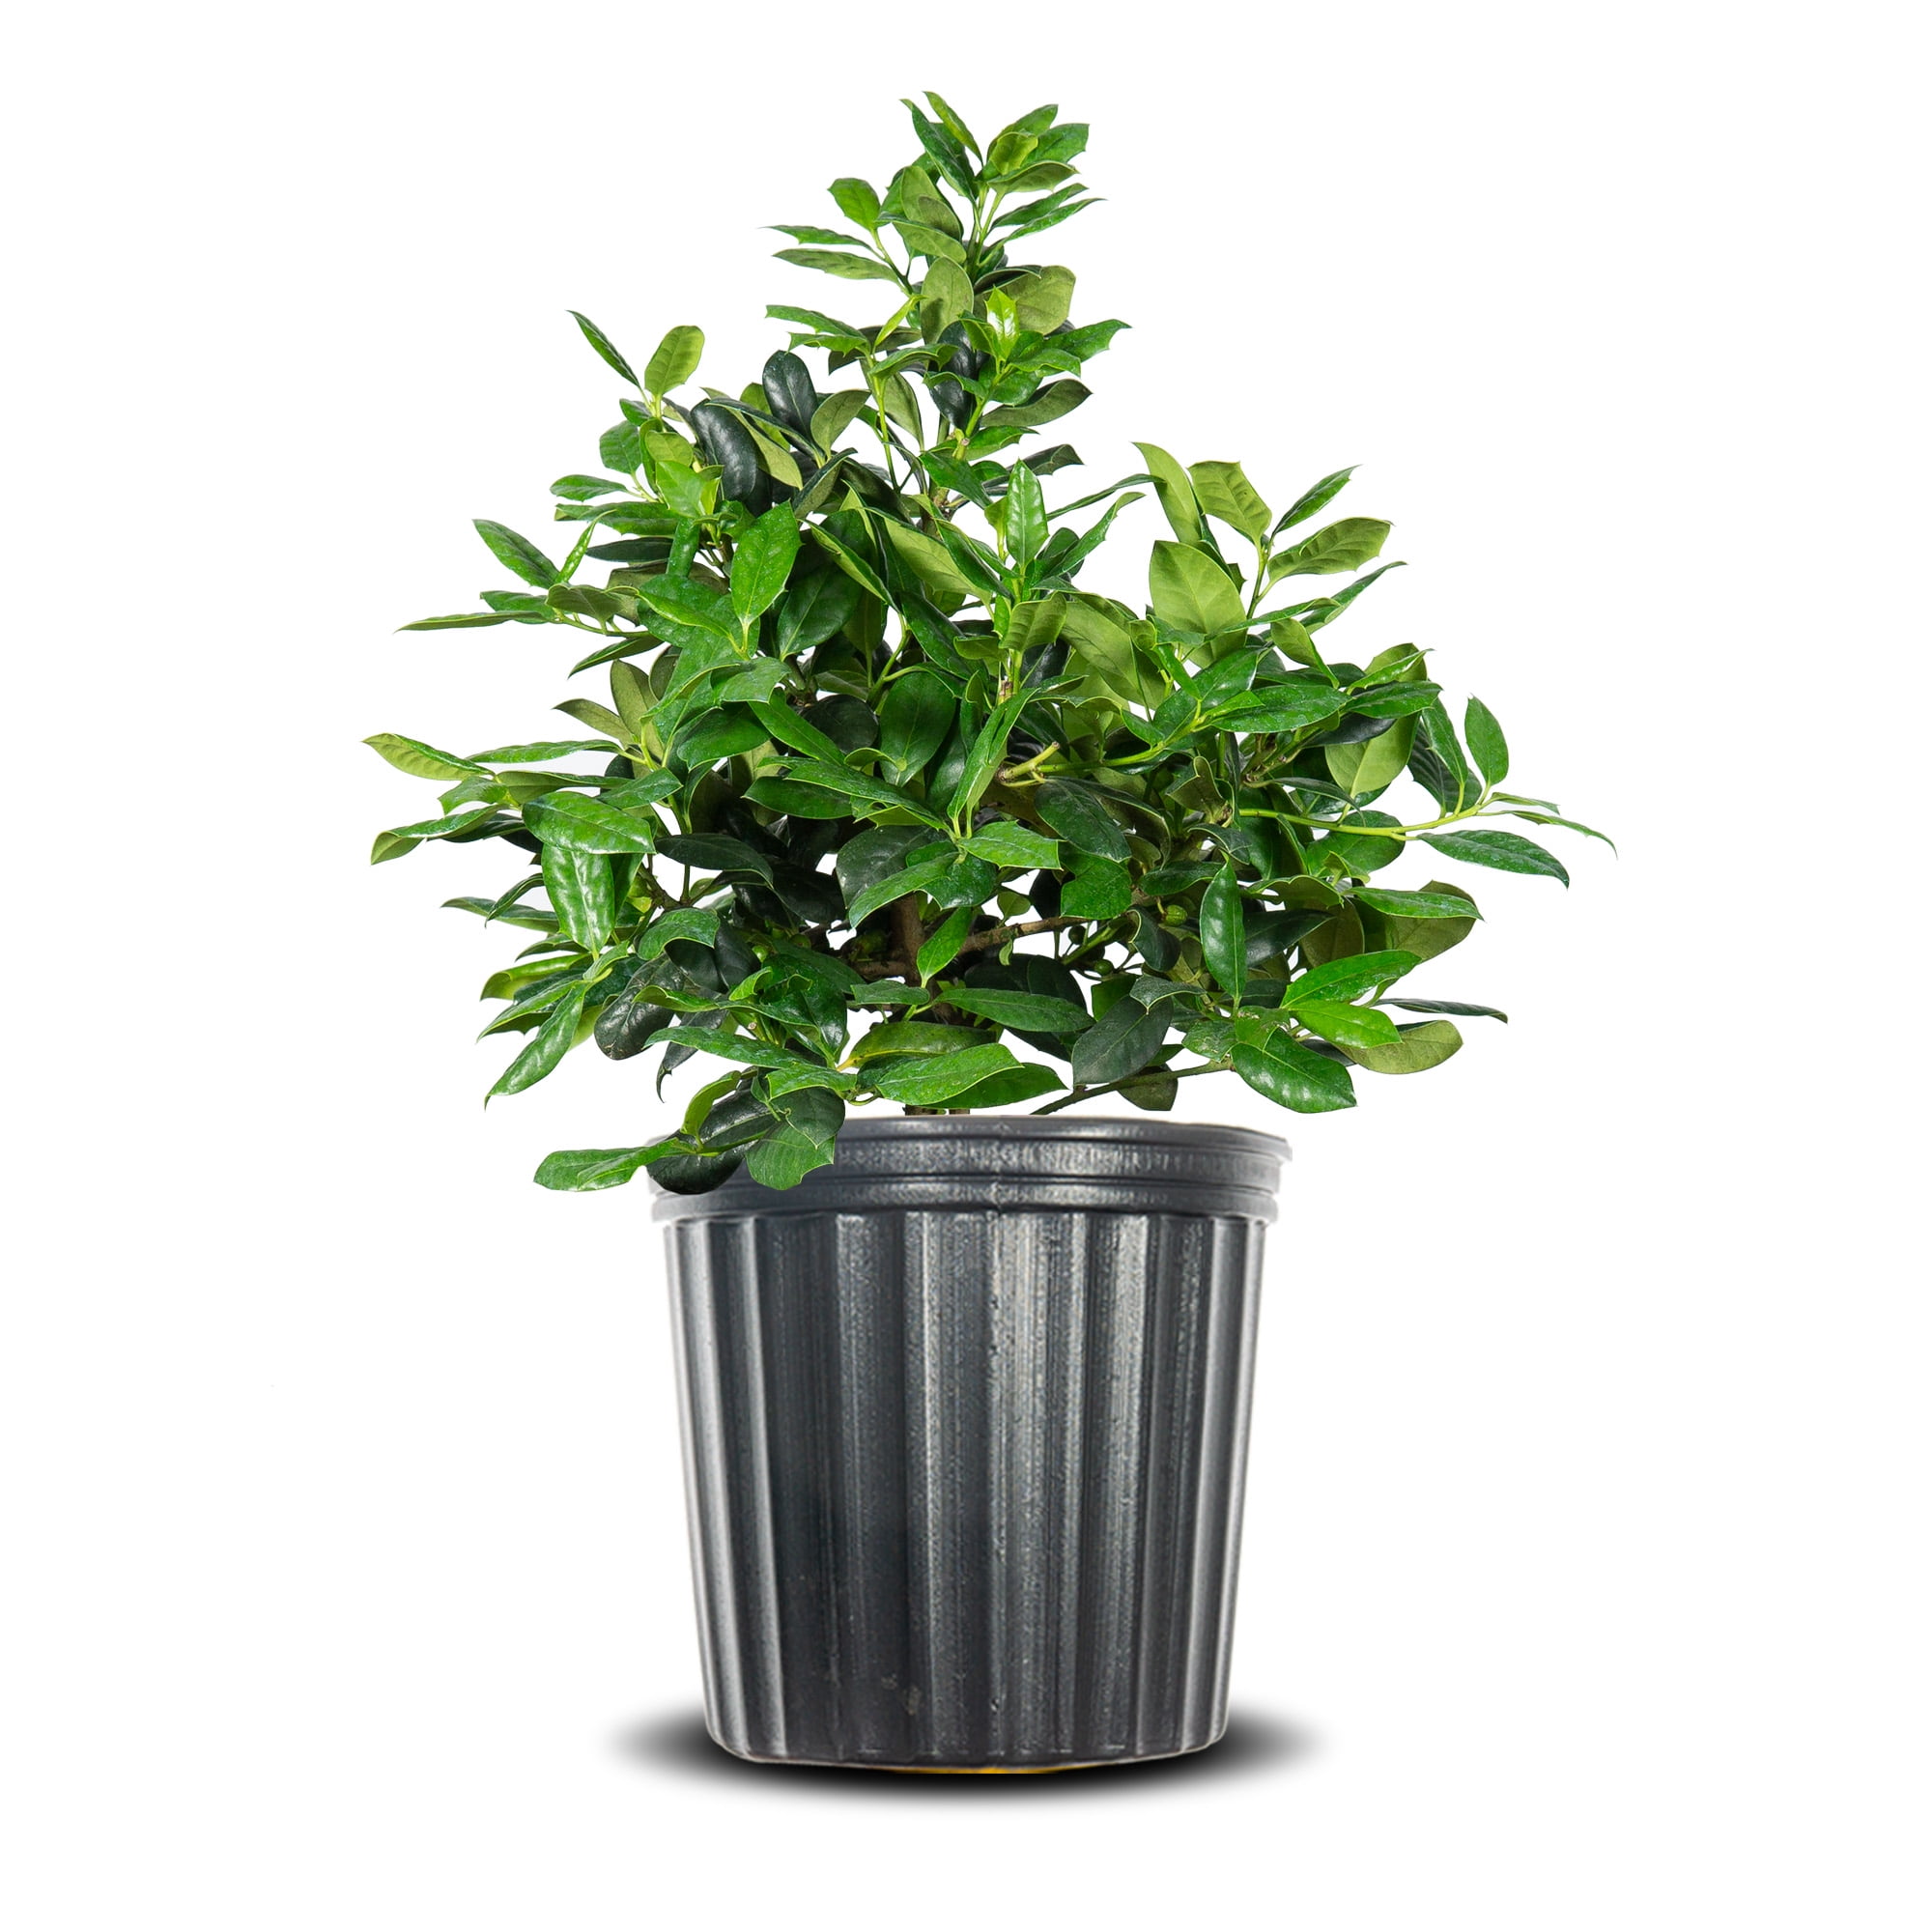 Christmas Jewel Holly - 3 Gallon Pot - Deer-Resistant, Drought-Tolerant, Evergreen Tree - Zone 6-9